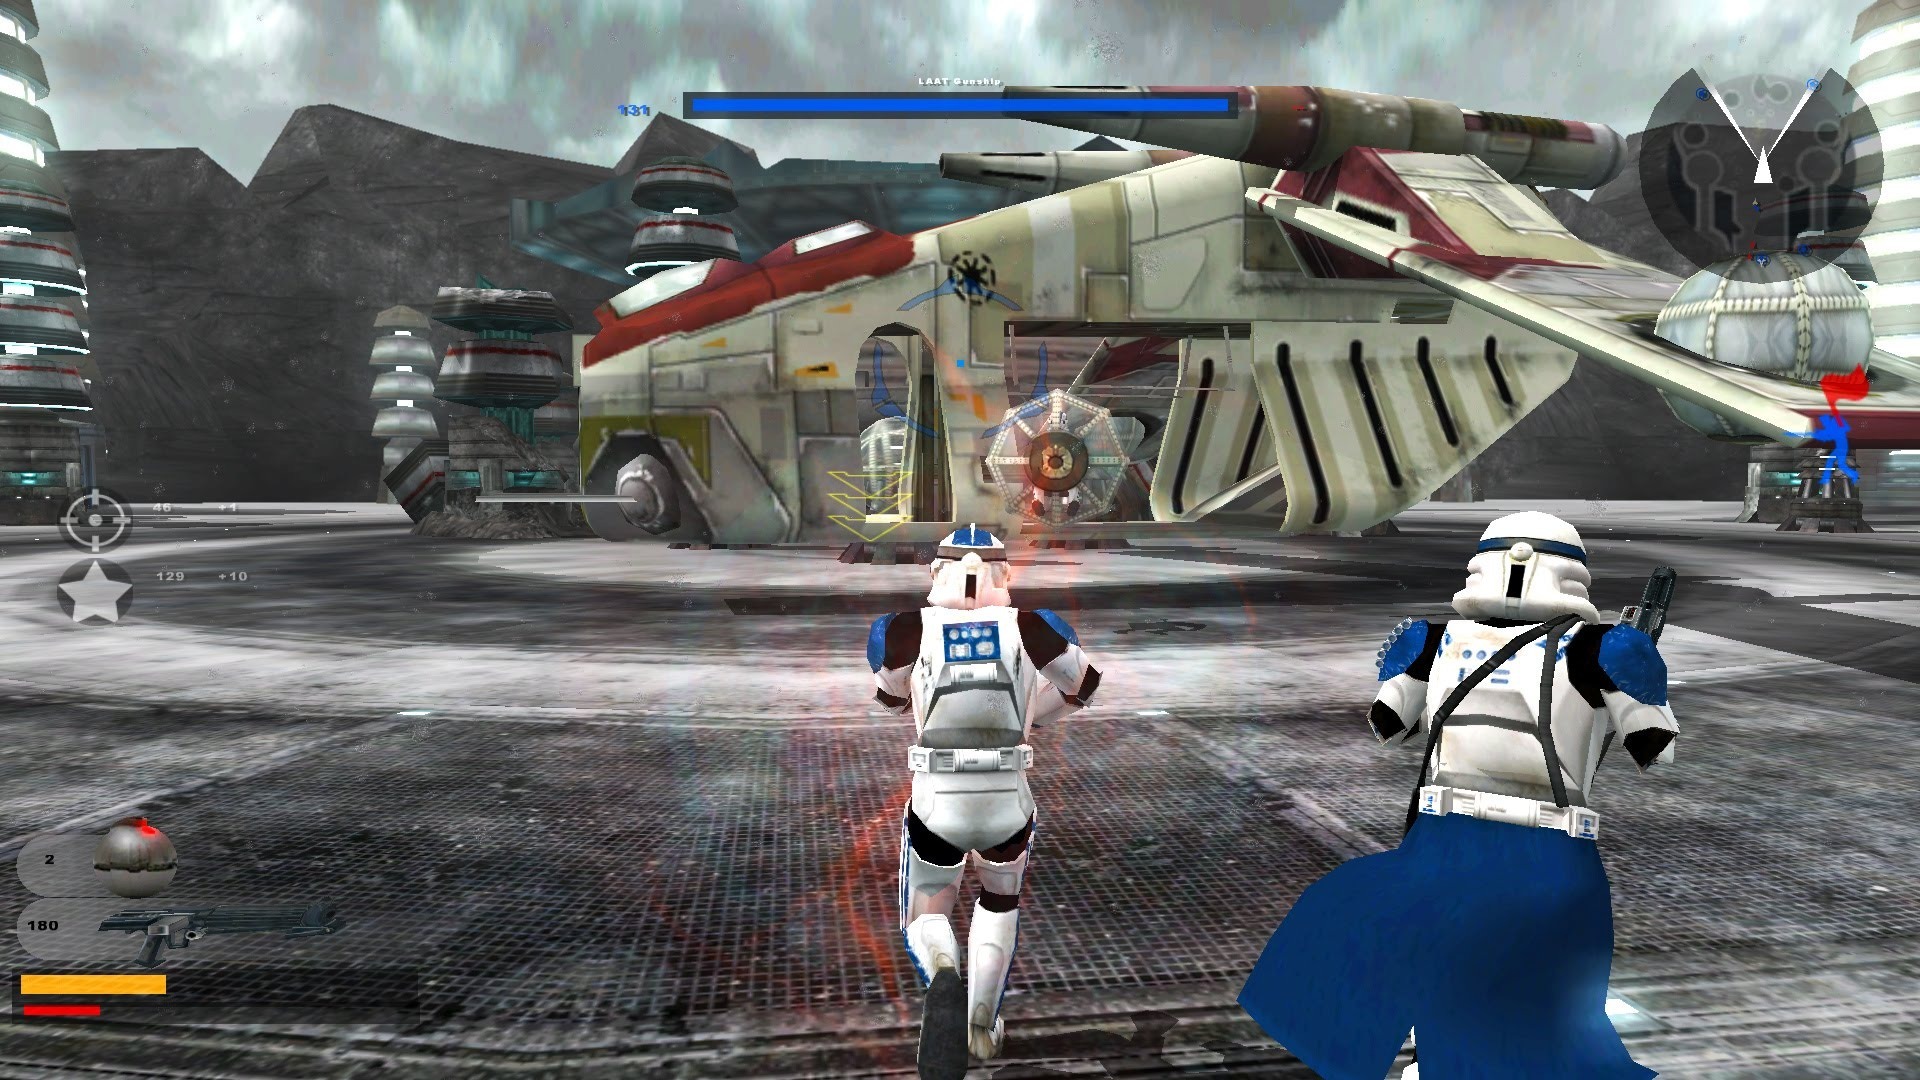 Star wars gameplay. Стар ВАРС батлфронт 2. Звёздные войны батлфронт 2 2005. Стар ВАРС батлфронт 2 геймплей. Star Wars: Battlefront (игра, 2005).